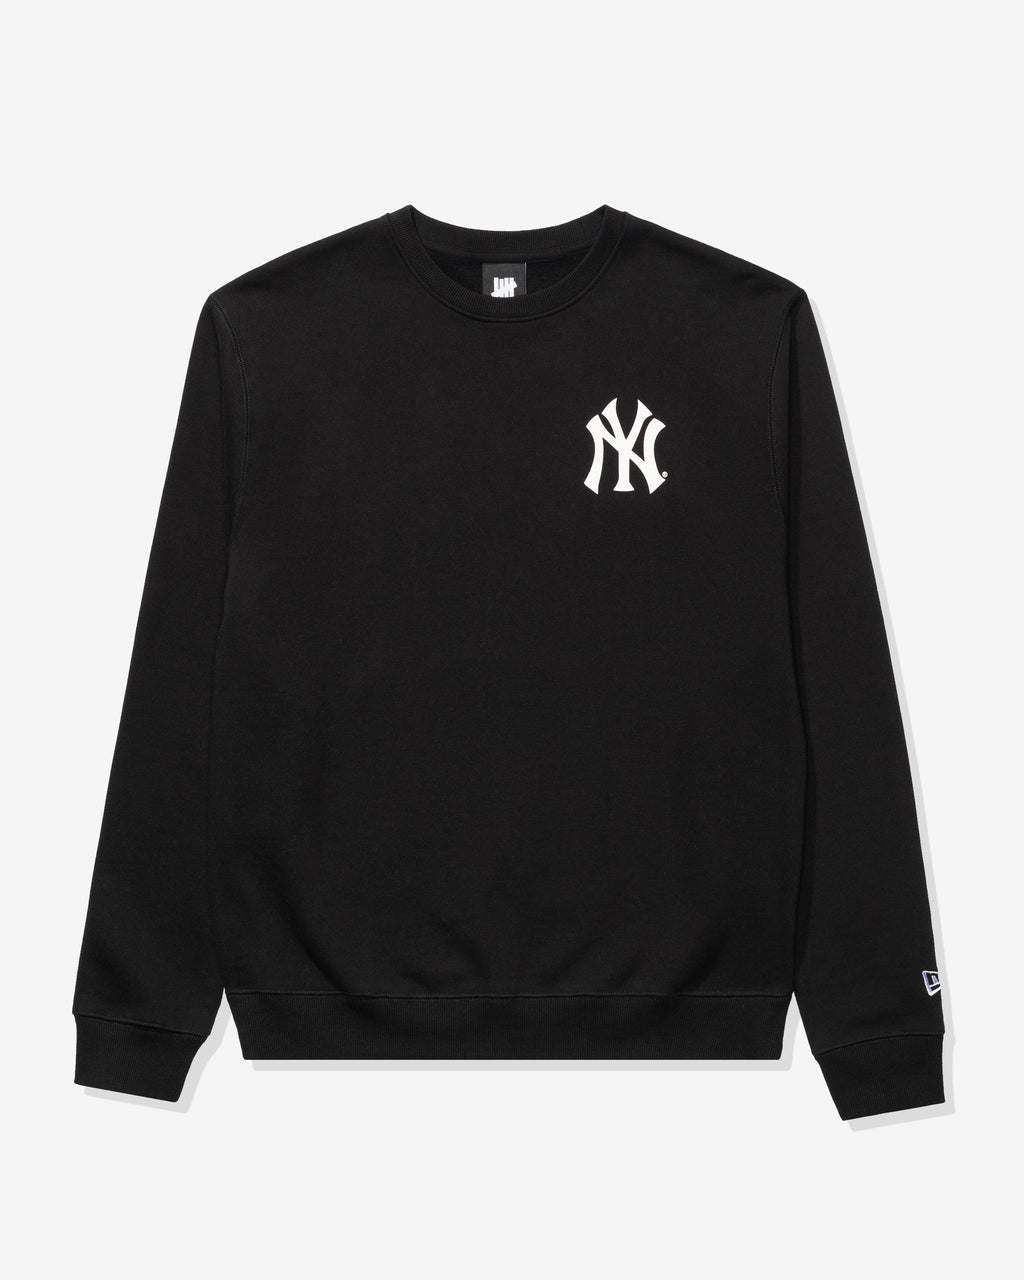 New York Yankees on X: That 99 shine ✨  / X